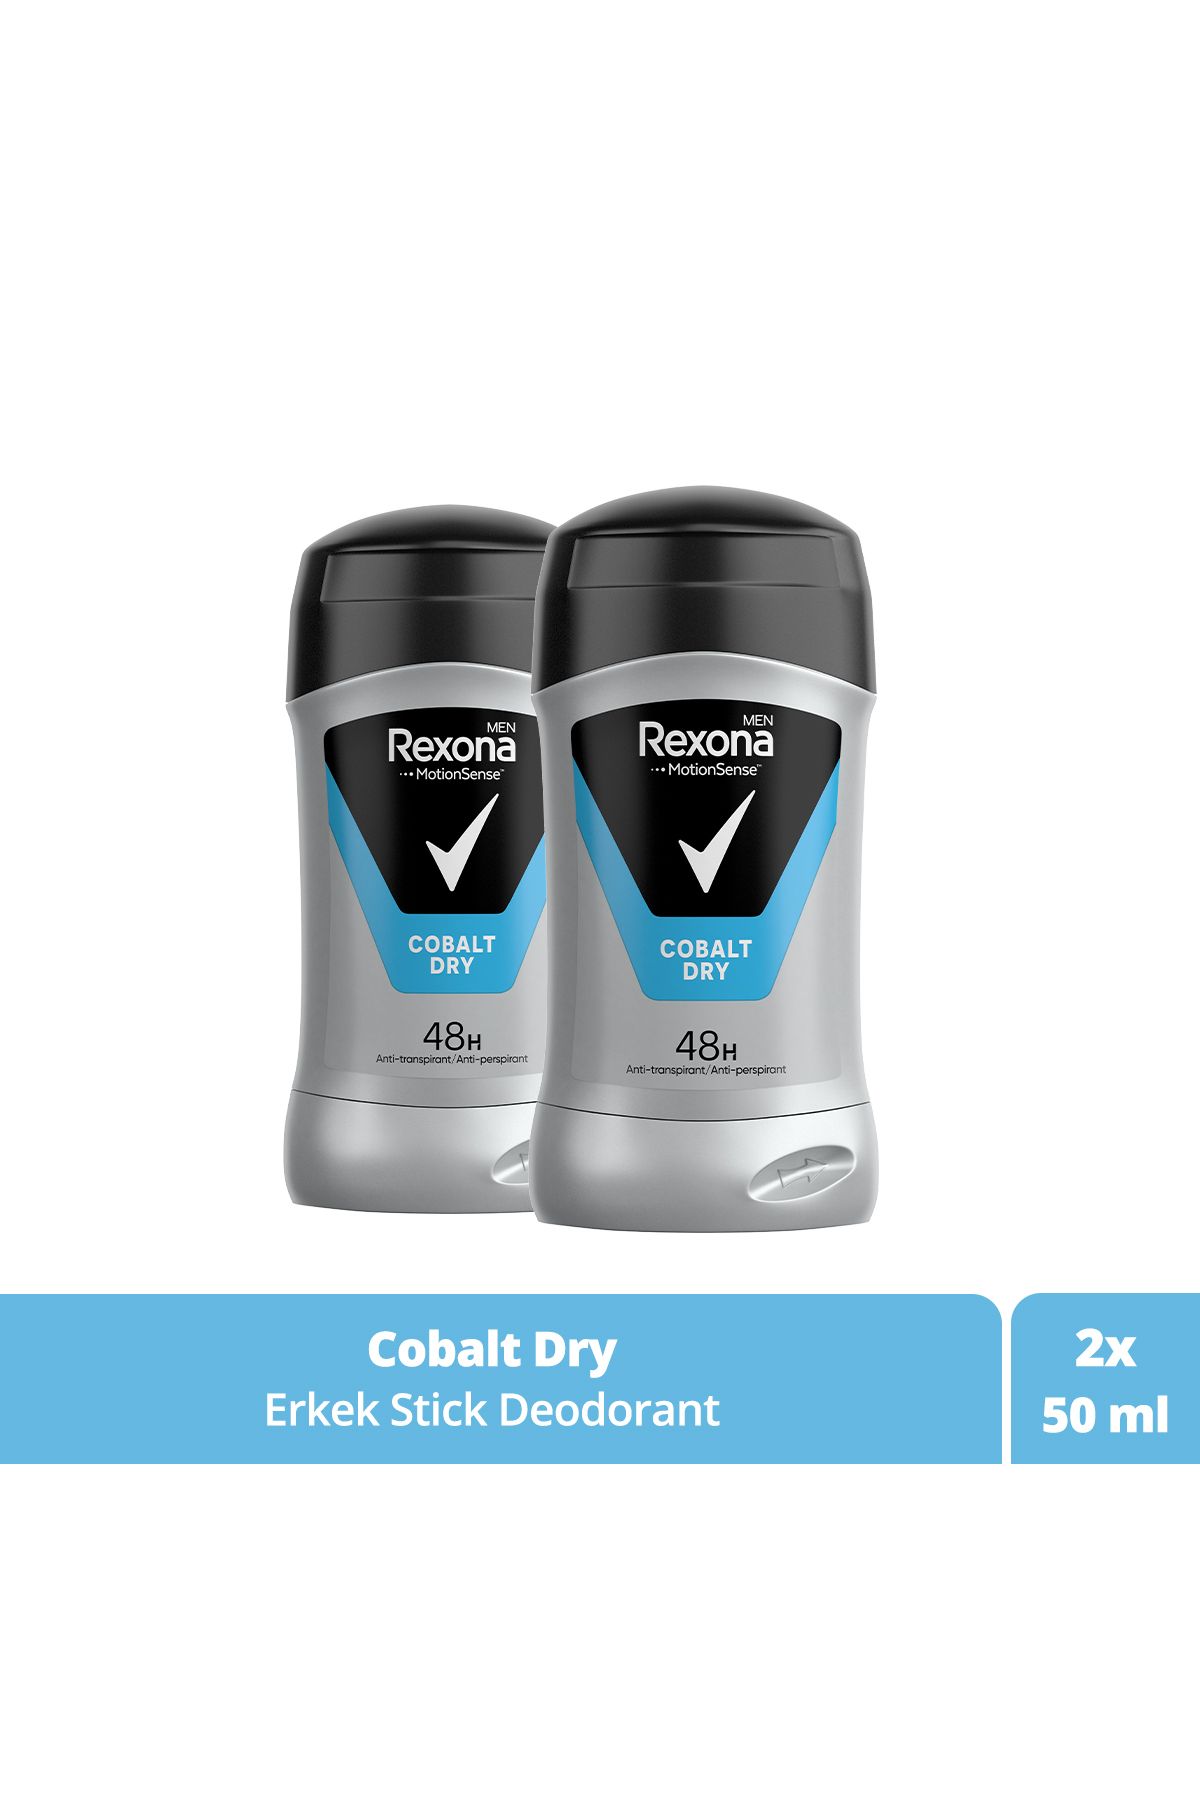 Rexona Men Motionsense Erkek Stick Deodorant Cobalt Dry 50 ml X2